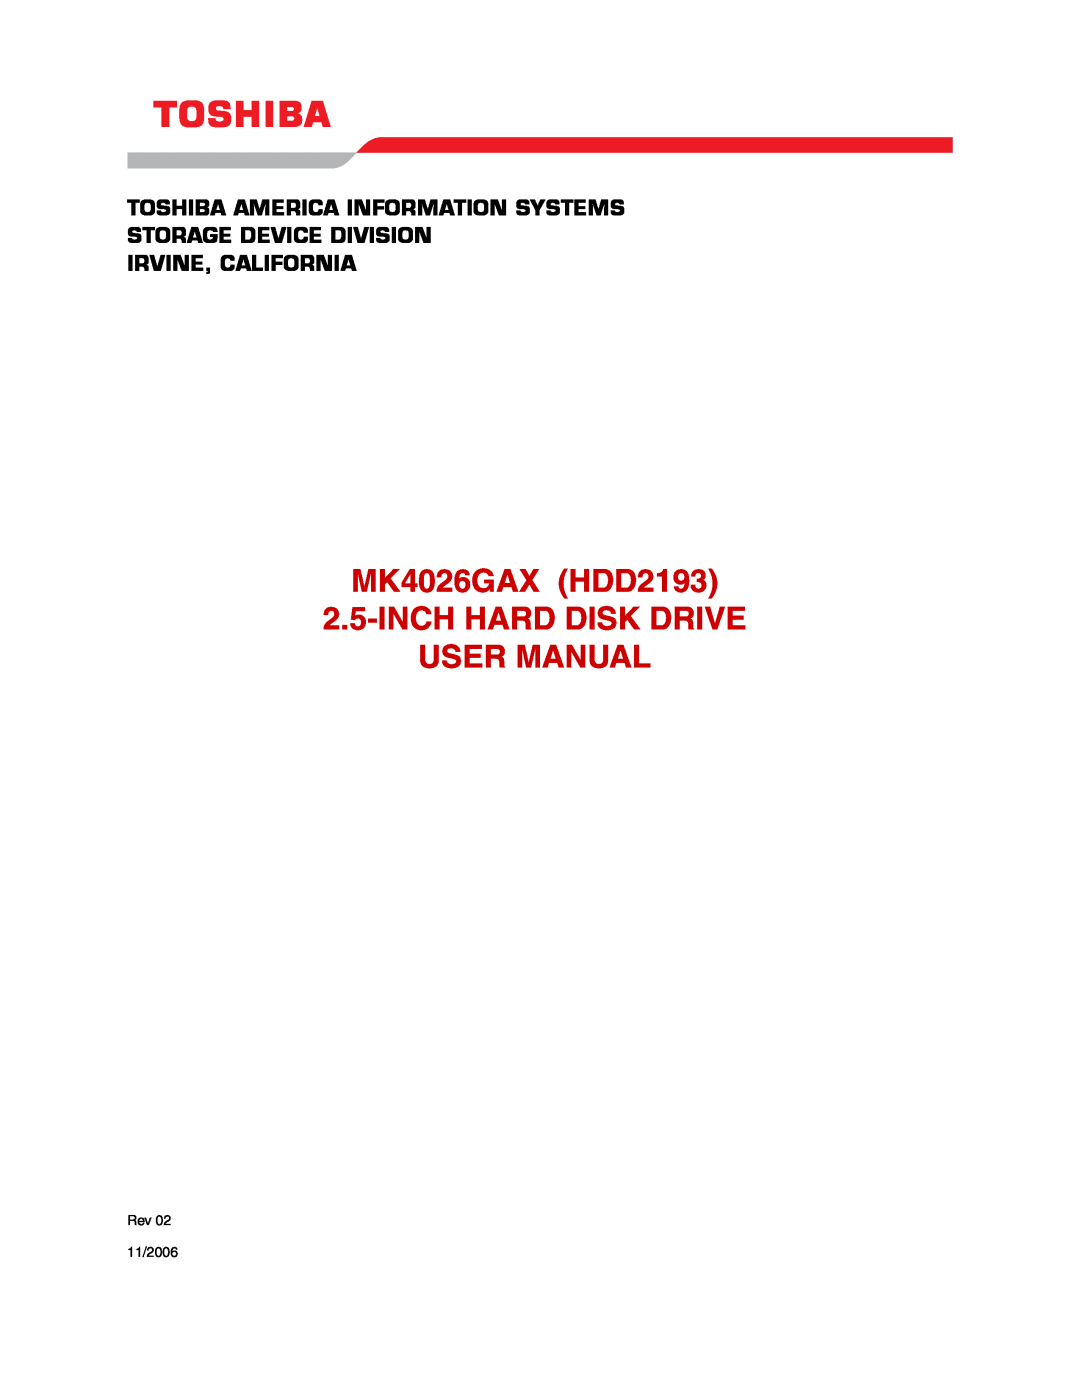 Toshiba MK4026GAX (HDD2193) user manual MK4026GAX HDD2193 2.5-INCH HARD DISK DRIVE USER MANUAL, Irvine, California 